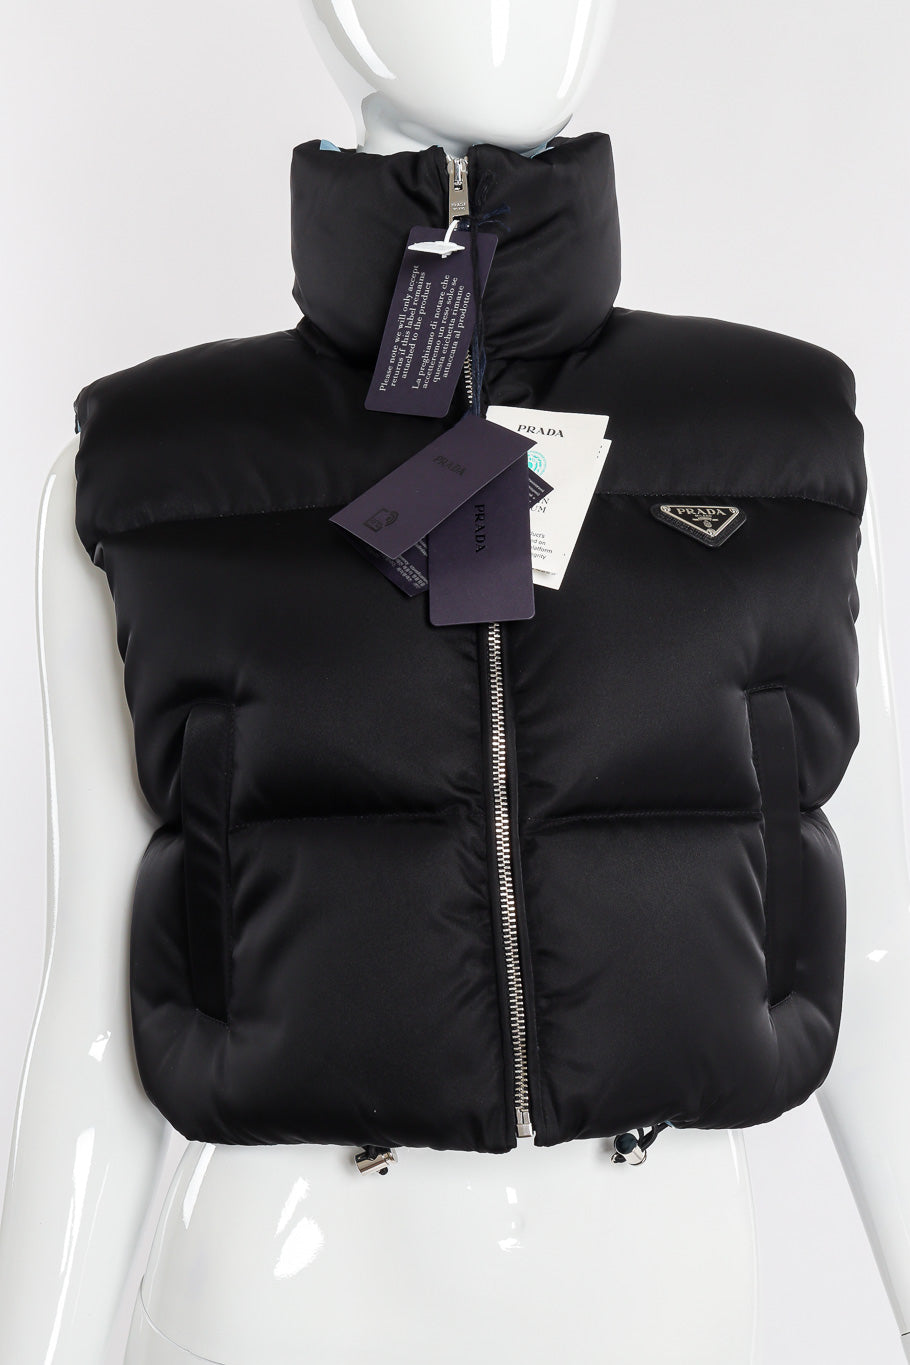 Prada Re-nylon Cropped Puffer Vest front view on mannequin closeup @Recessla